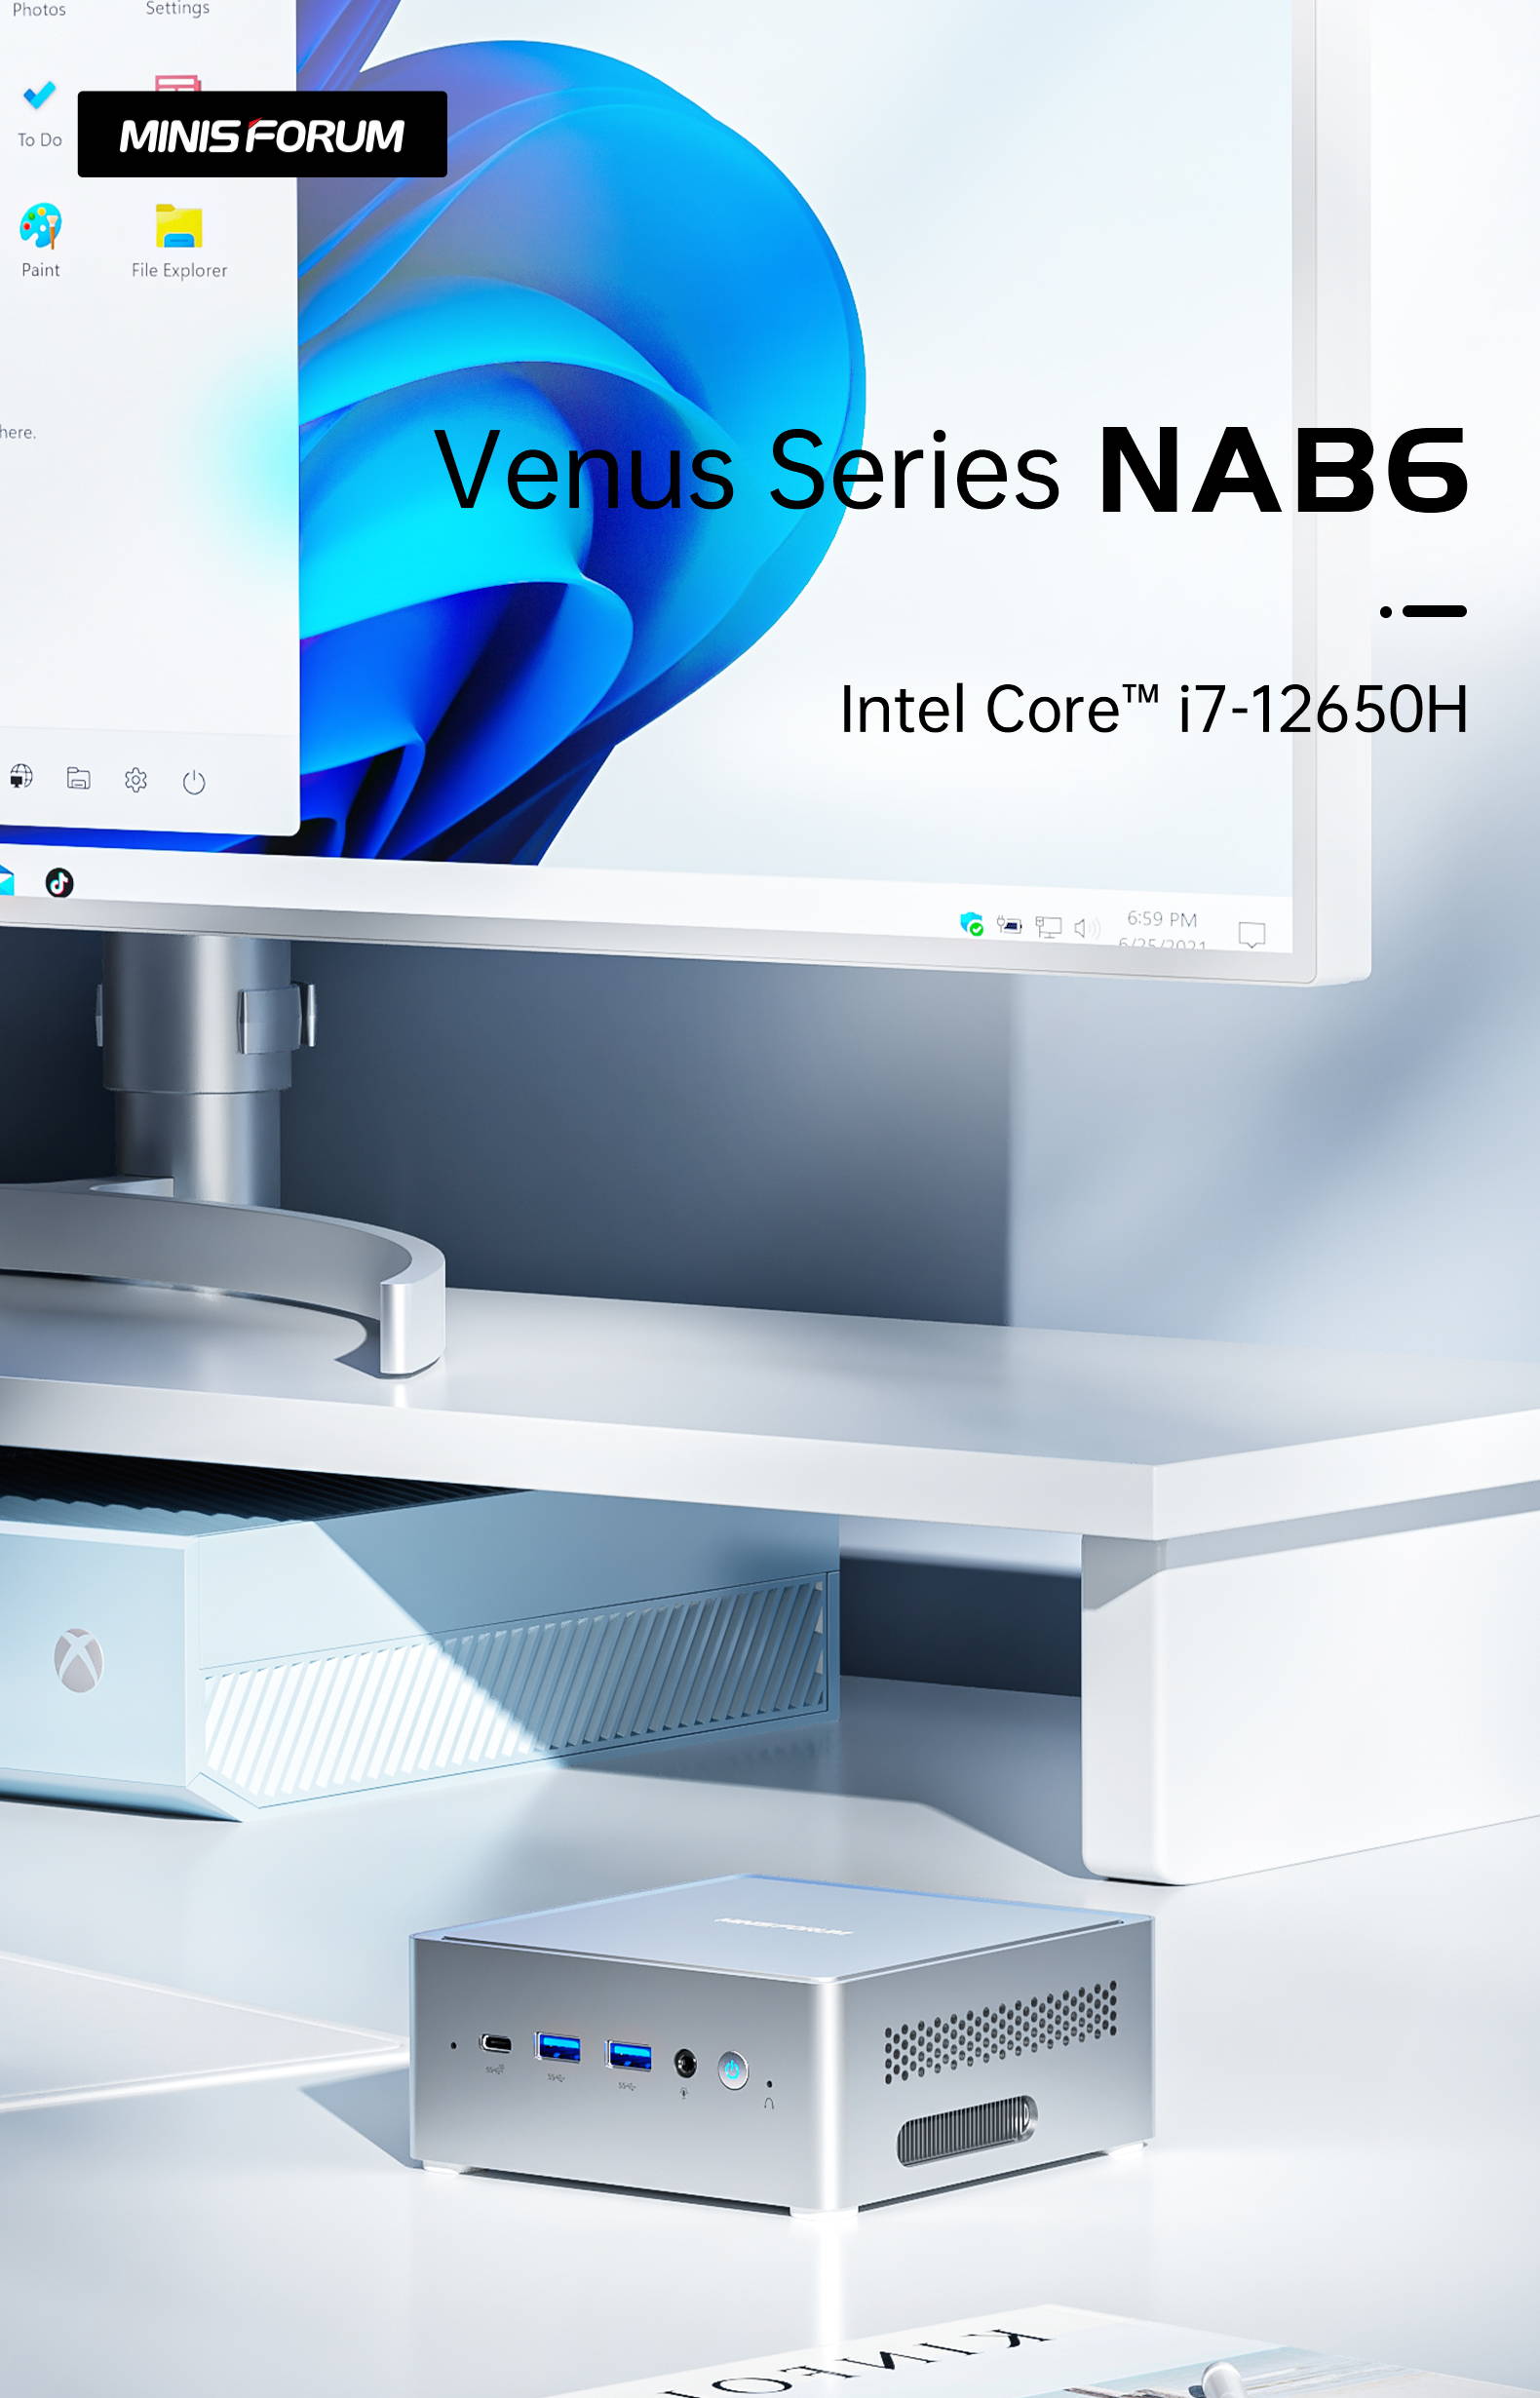 Minisforum unveils Venus NPB7 mini PC with Intel Core i7-13700H and dual  2.5 GbE connectivity -  News